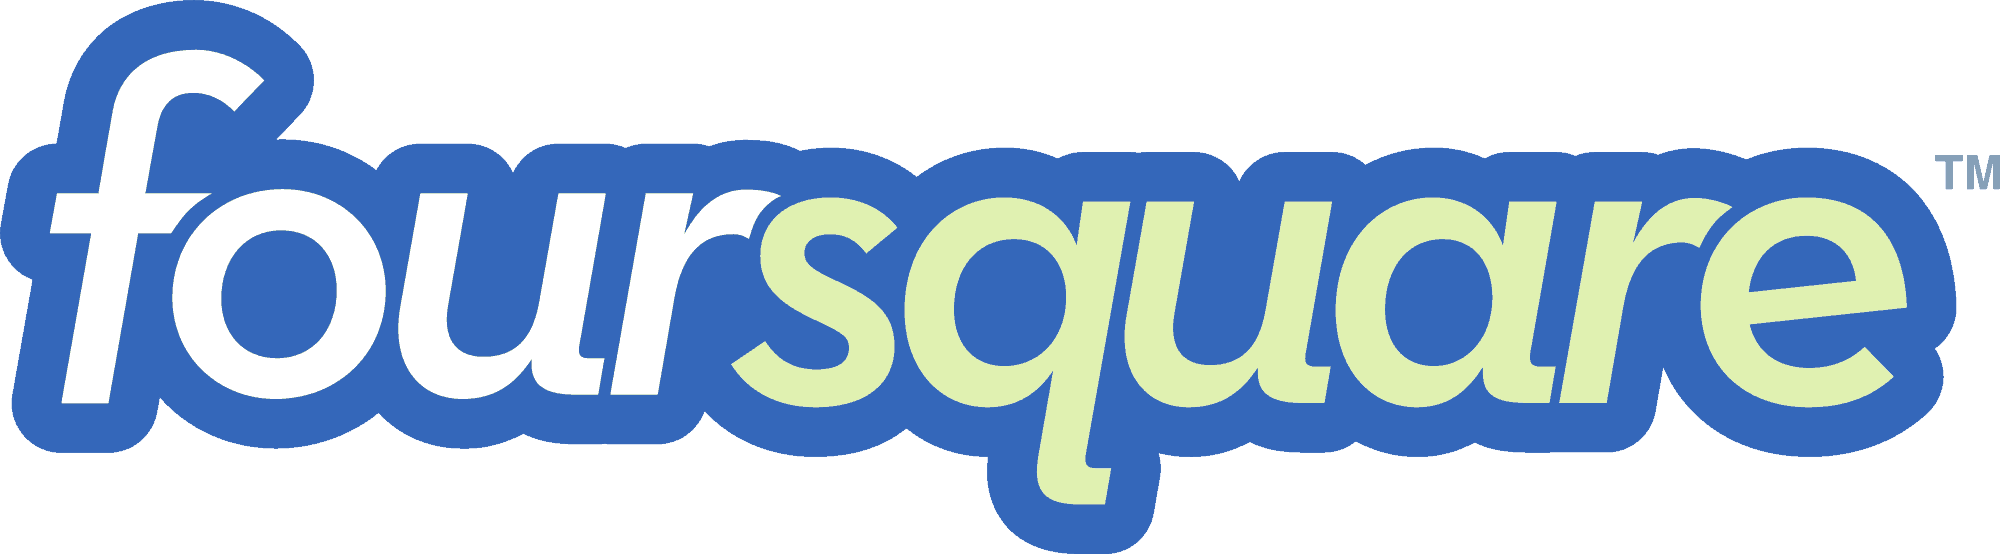 Foursquarelogo Logo - The FourSquare Logo - LeapFroggr